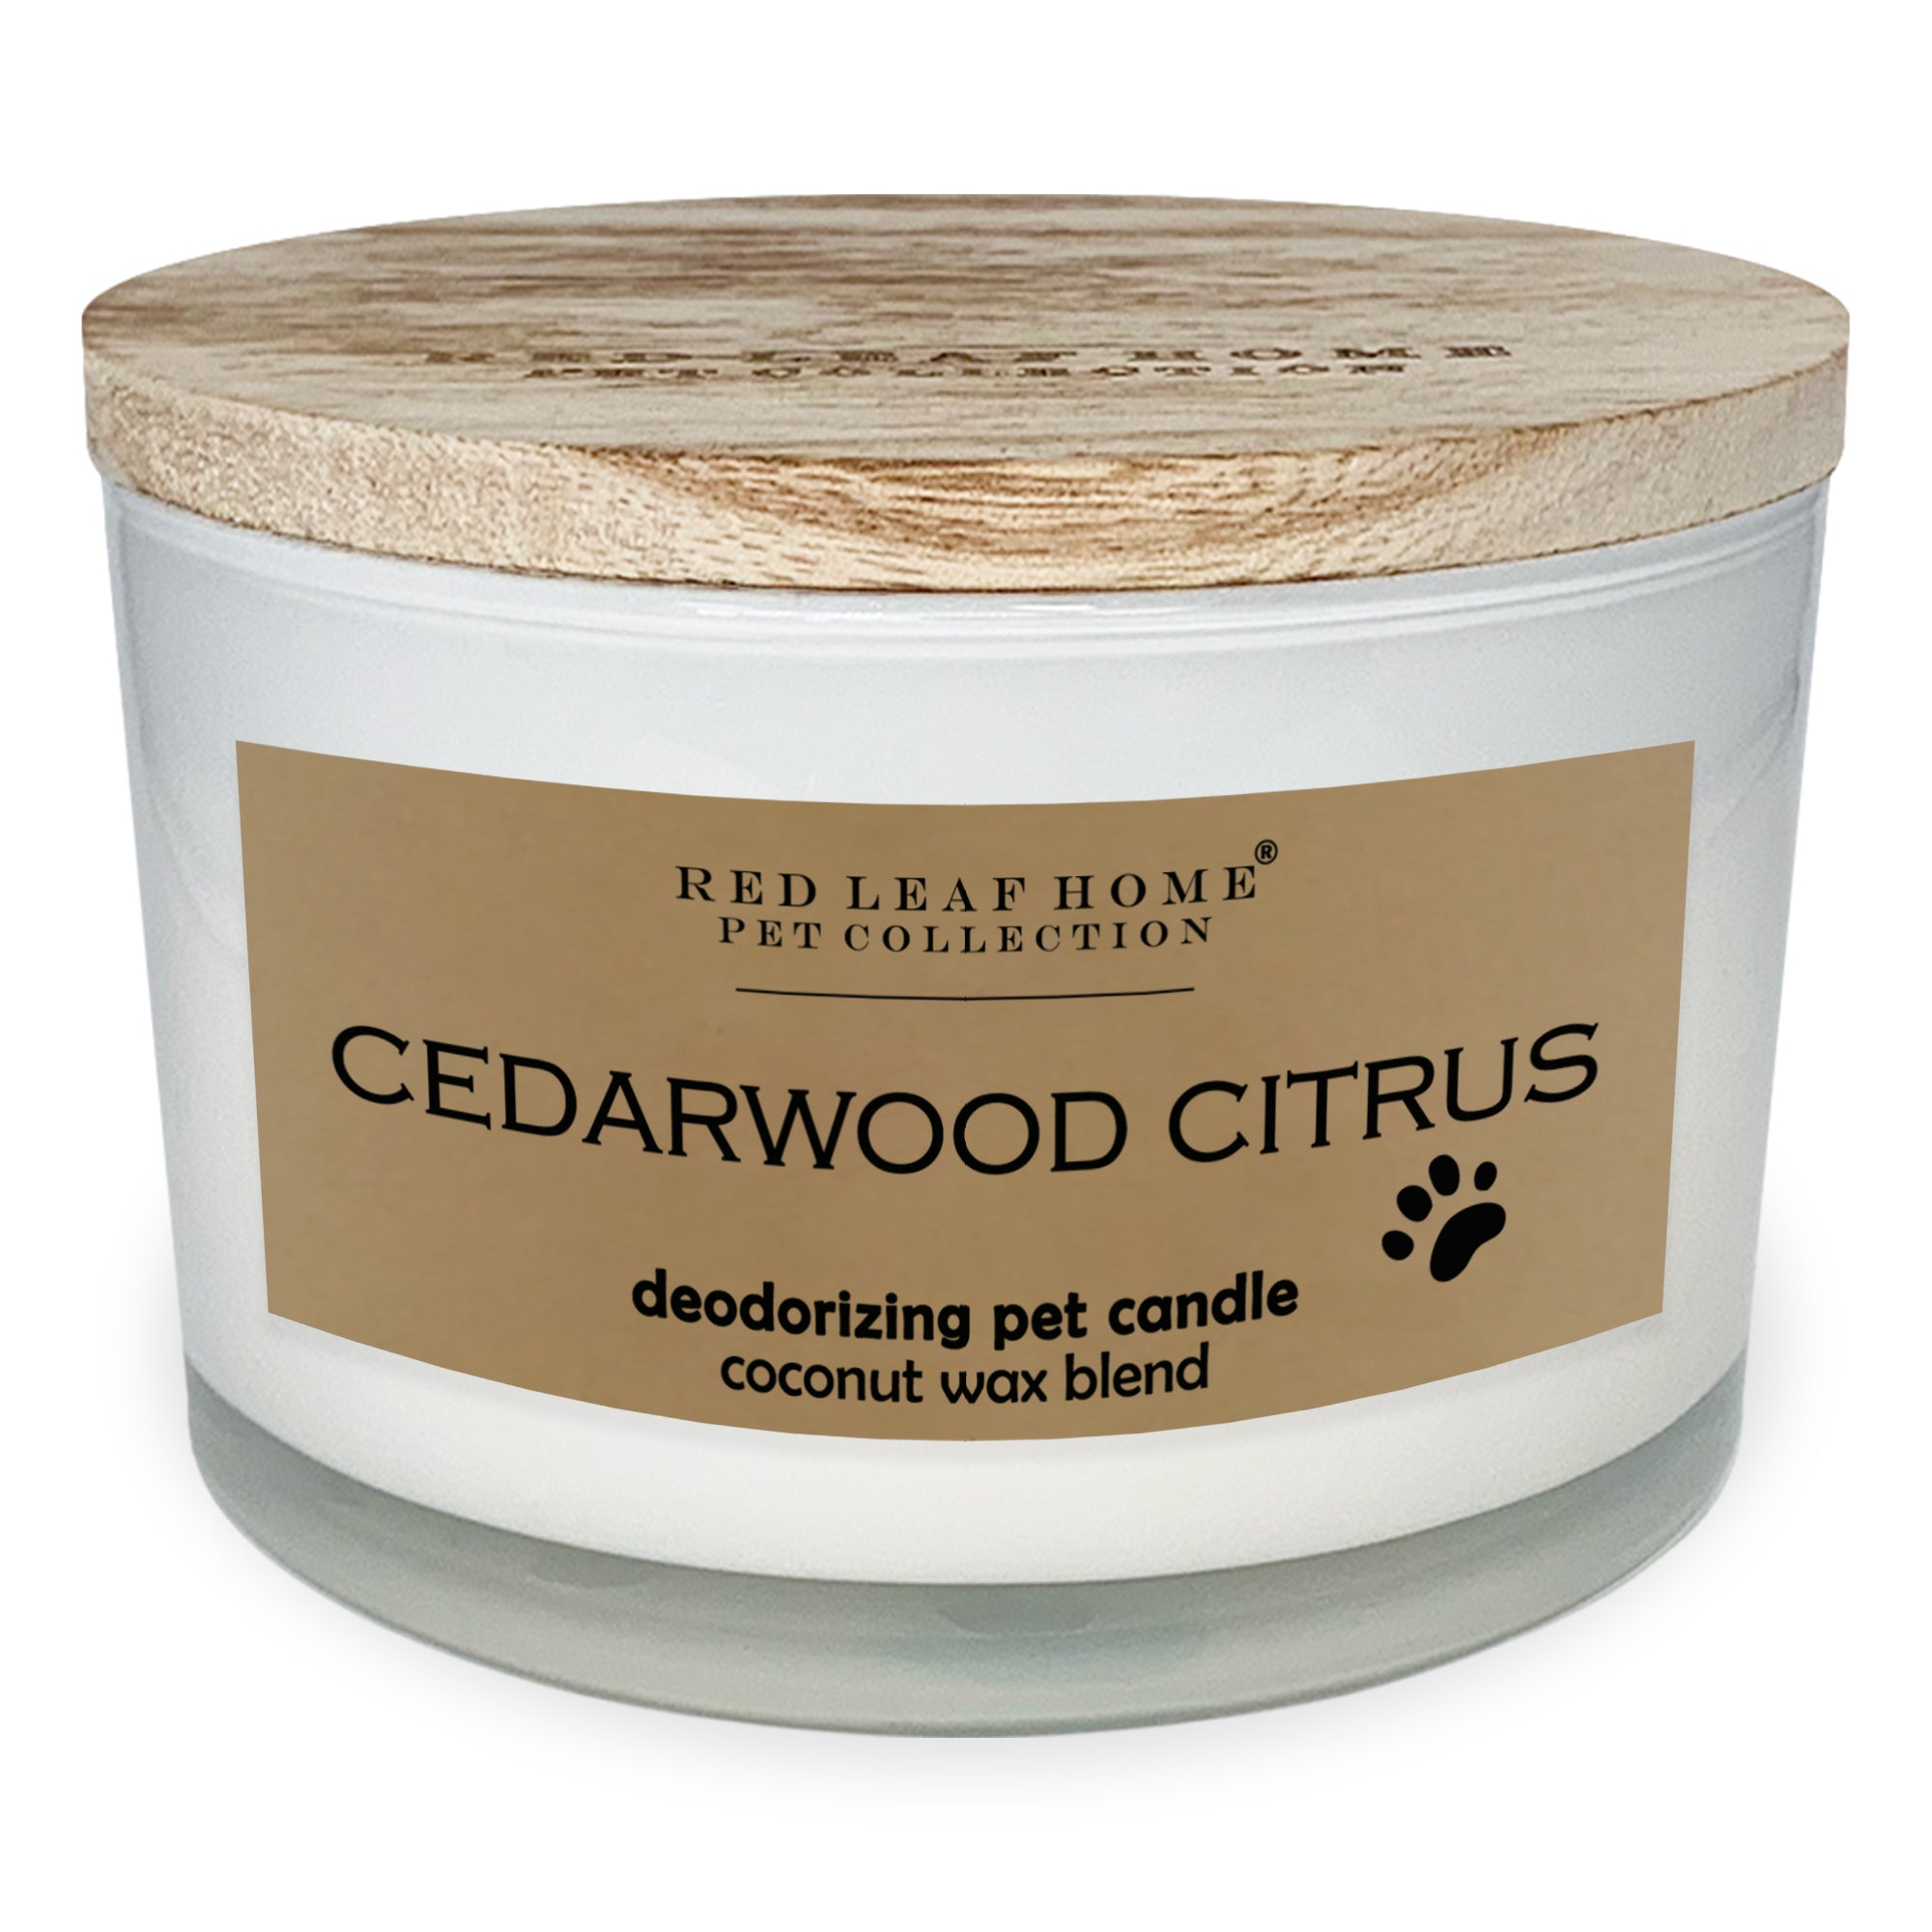 Cedarwood Citrus Pet Deodorizing